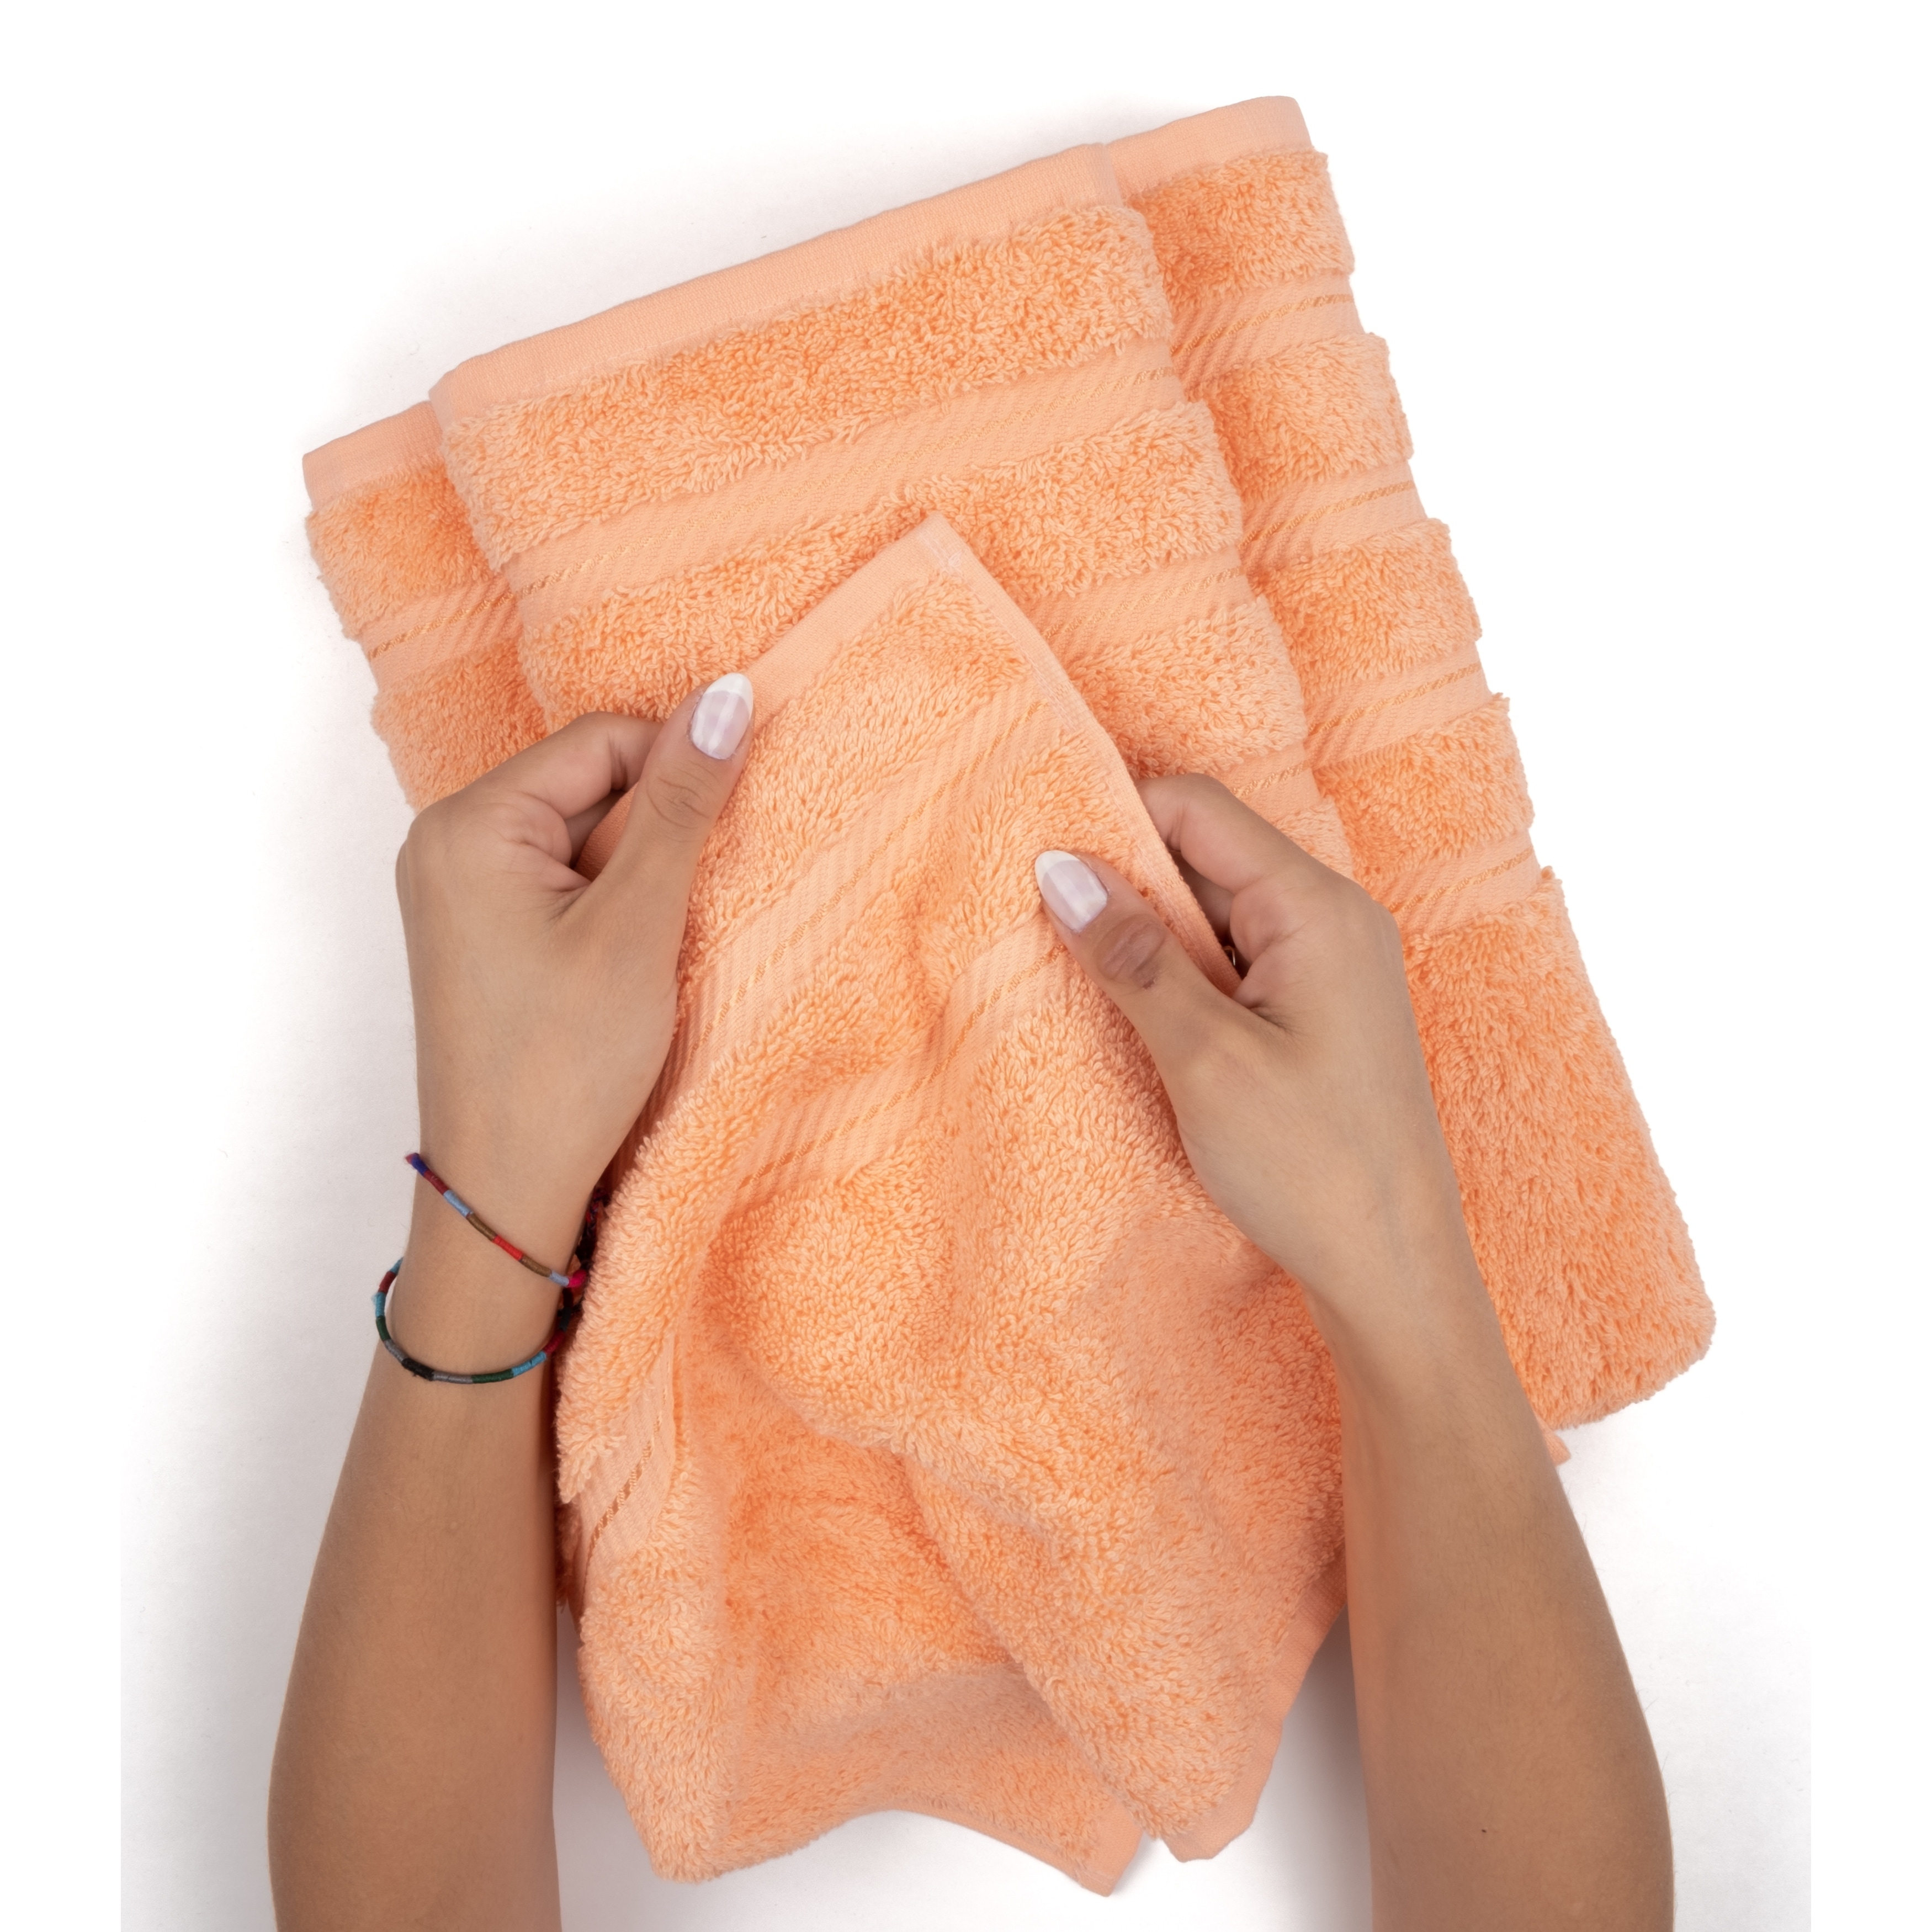 https://ak1.ostkcdn.com/images/products/is/images/direct/b665aed05cd57fdff1047b6db8983b02d41ca6de/American-Soft-Linen-4-Piece-Turkish-Hand-Towel-Set.jpg